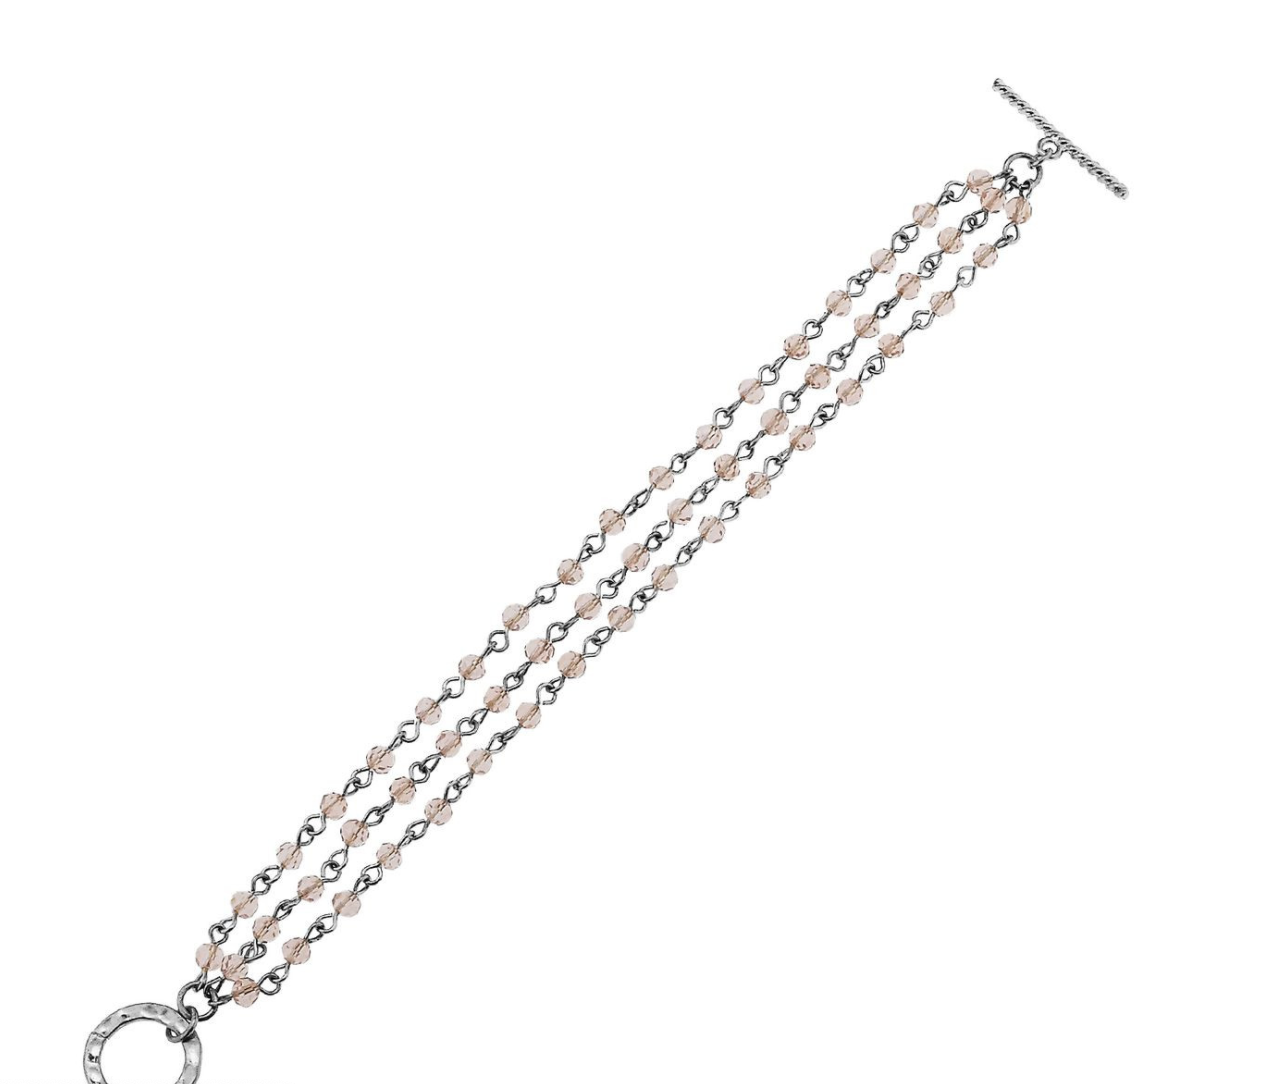 Linked Toggle Bracelet Collection